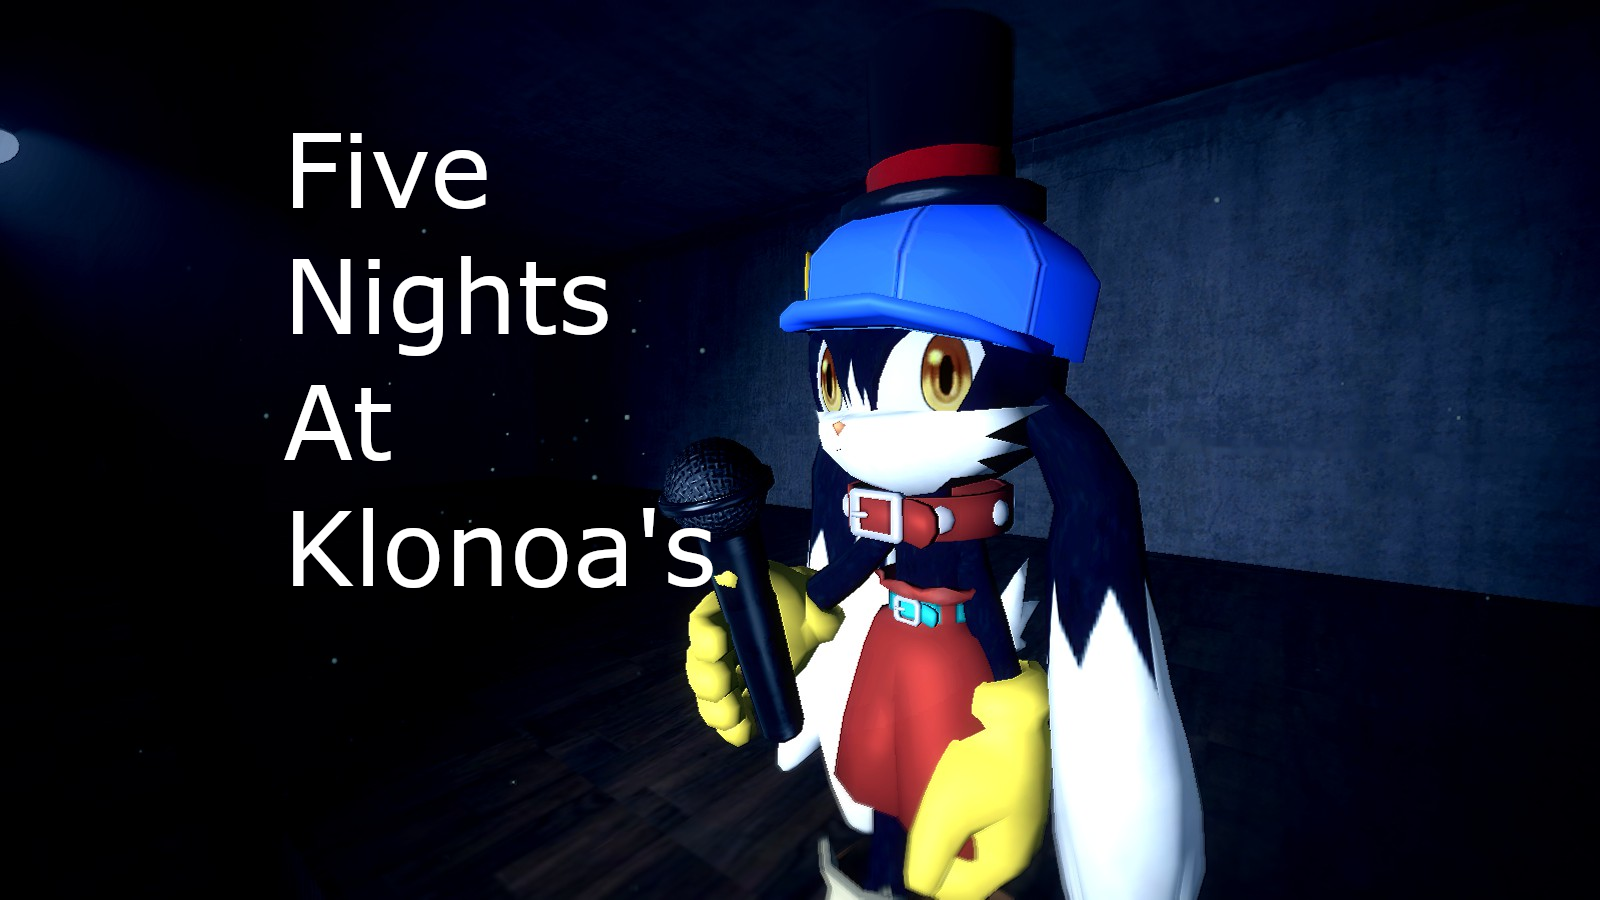 Five Nights At Klonoa's